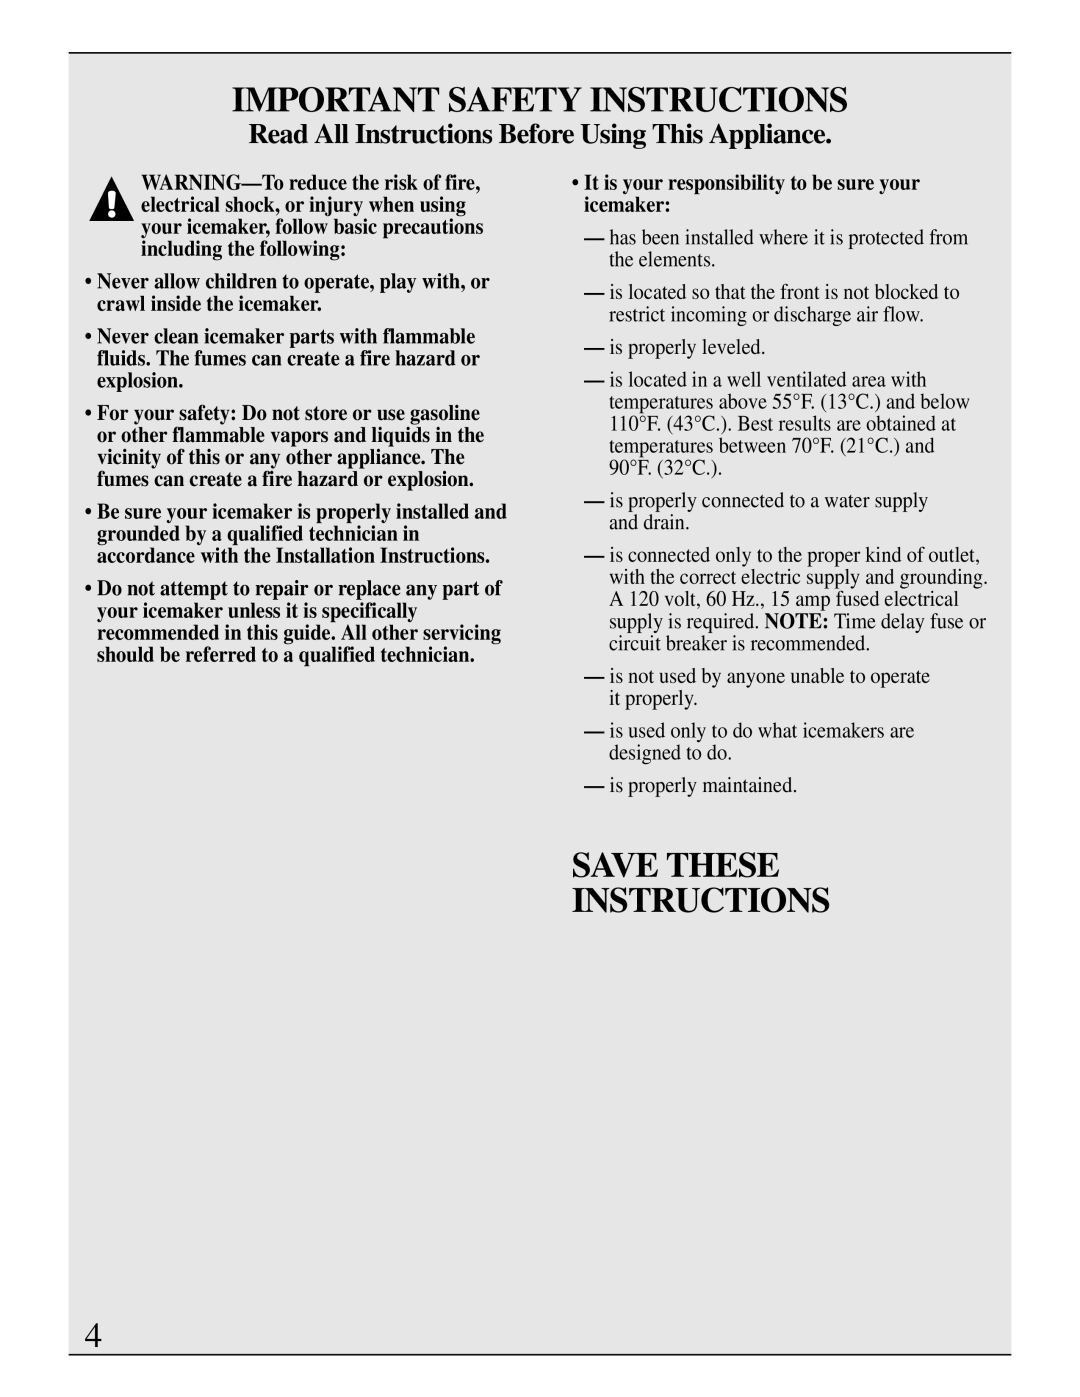 GE Monogram ZDIW50 installation instructions Important Safety Instructions, Save These Instructions 